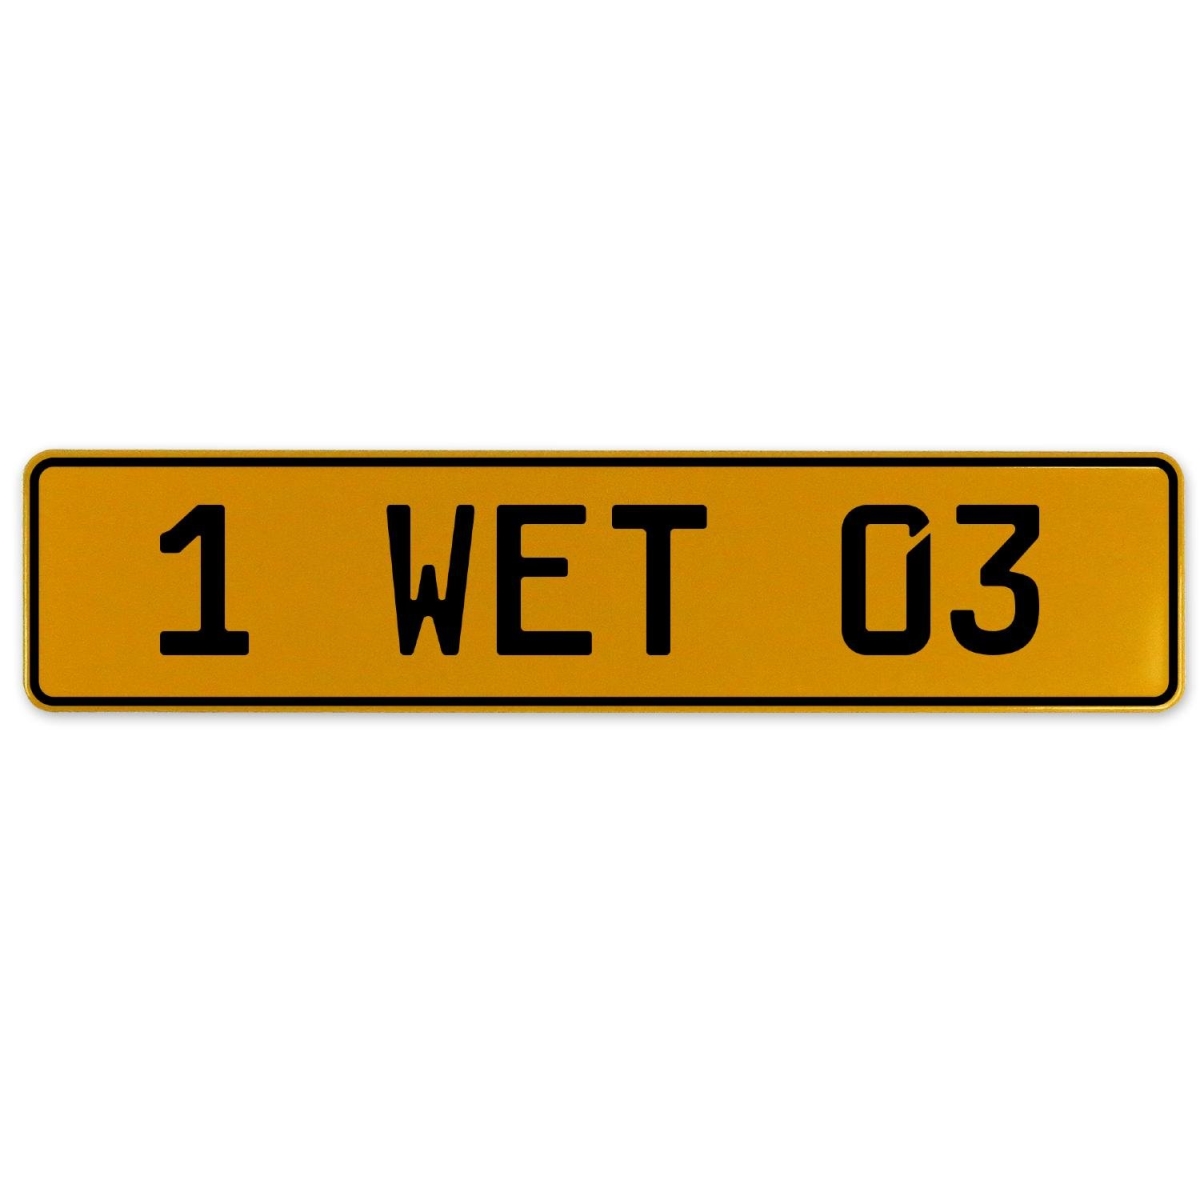 1 Wet 03 - Yellow Aluminum Street Sign Mancave Euro Plate Name Door Sign Wall